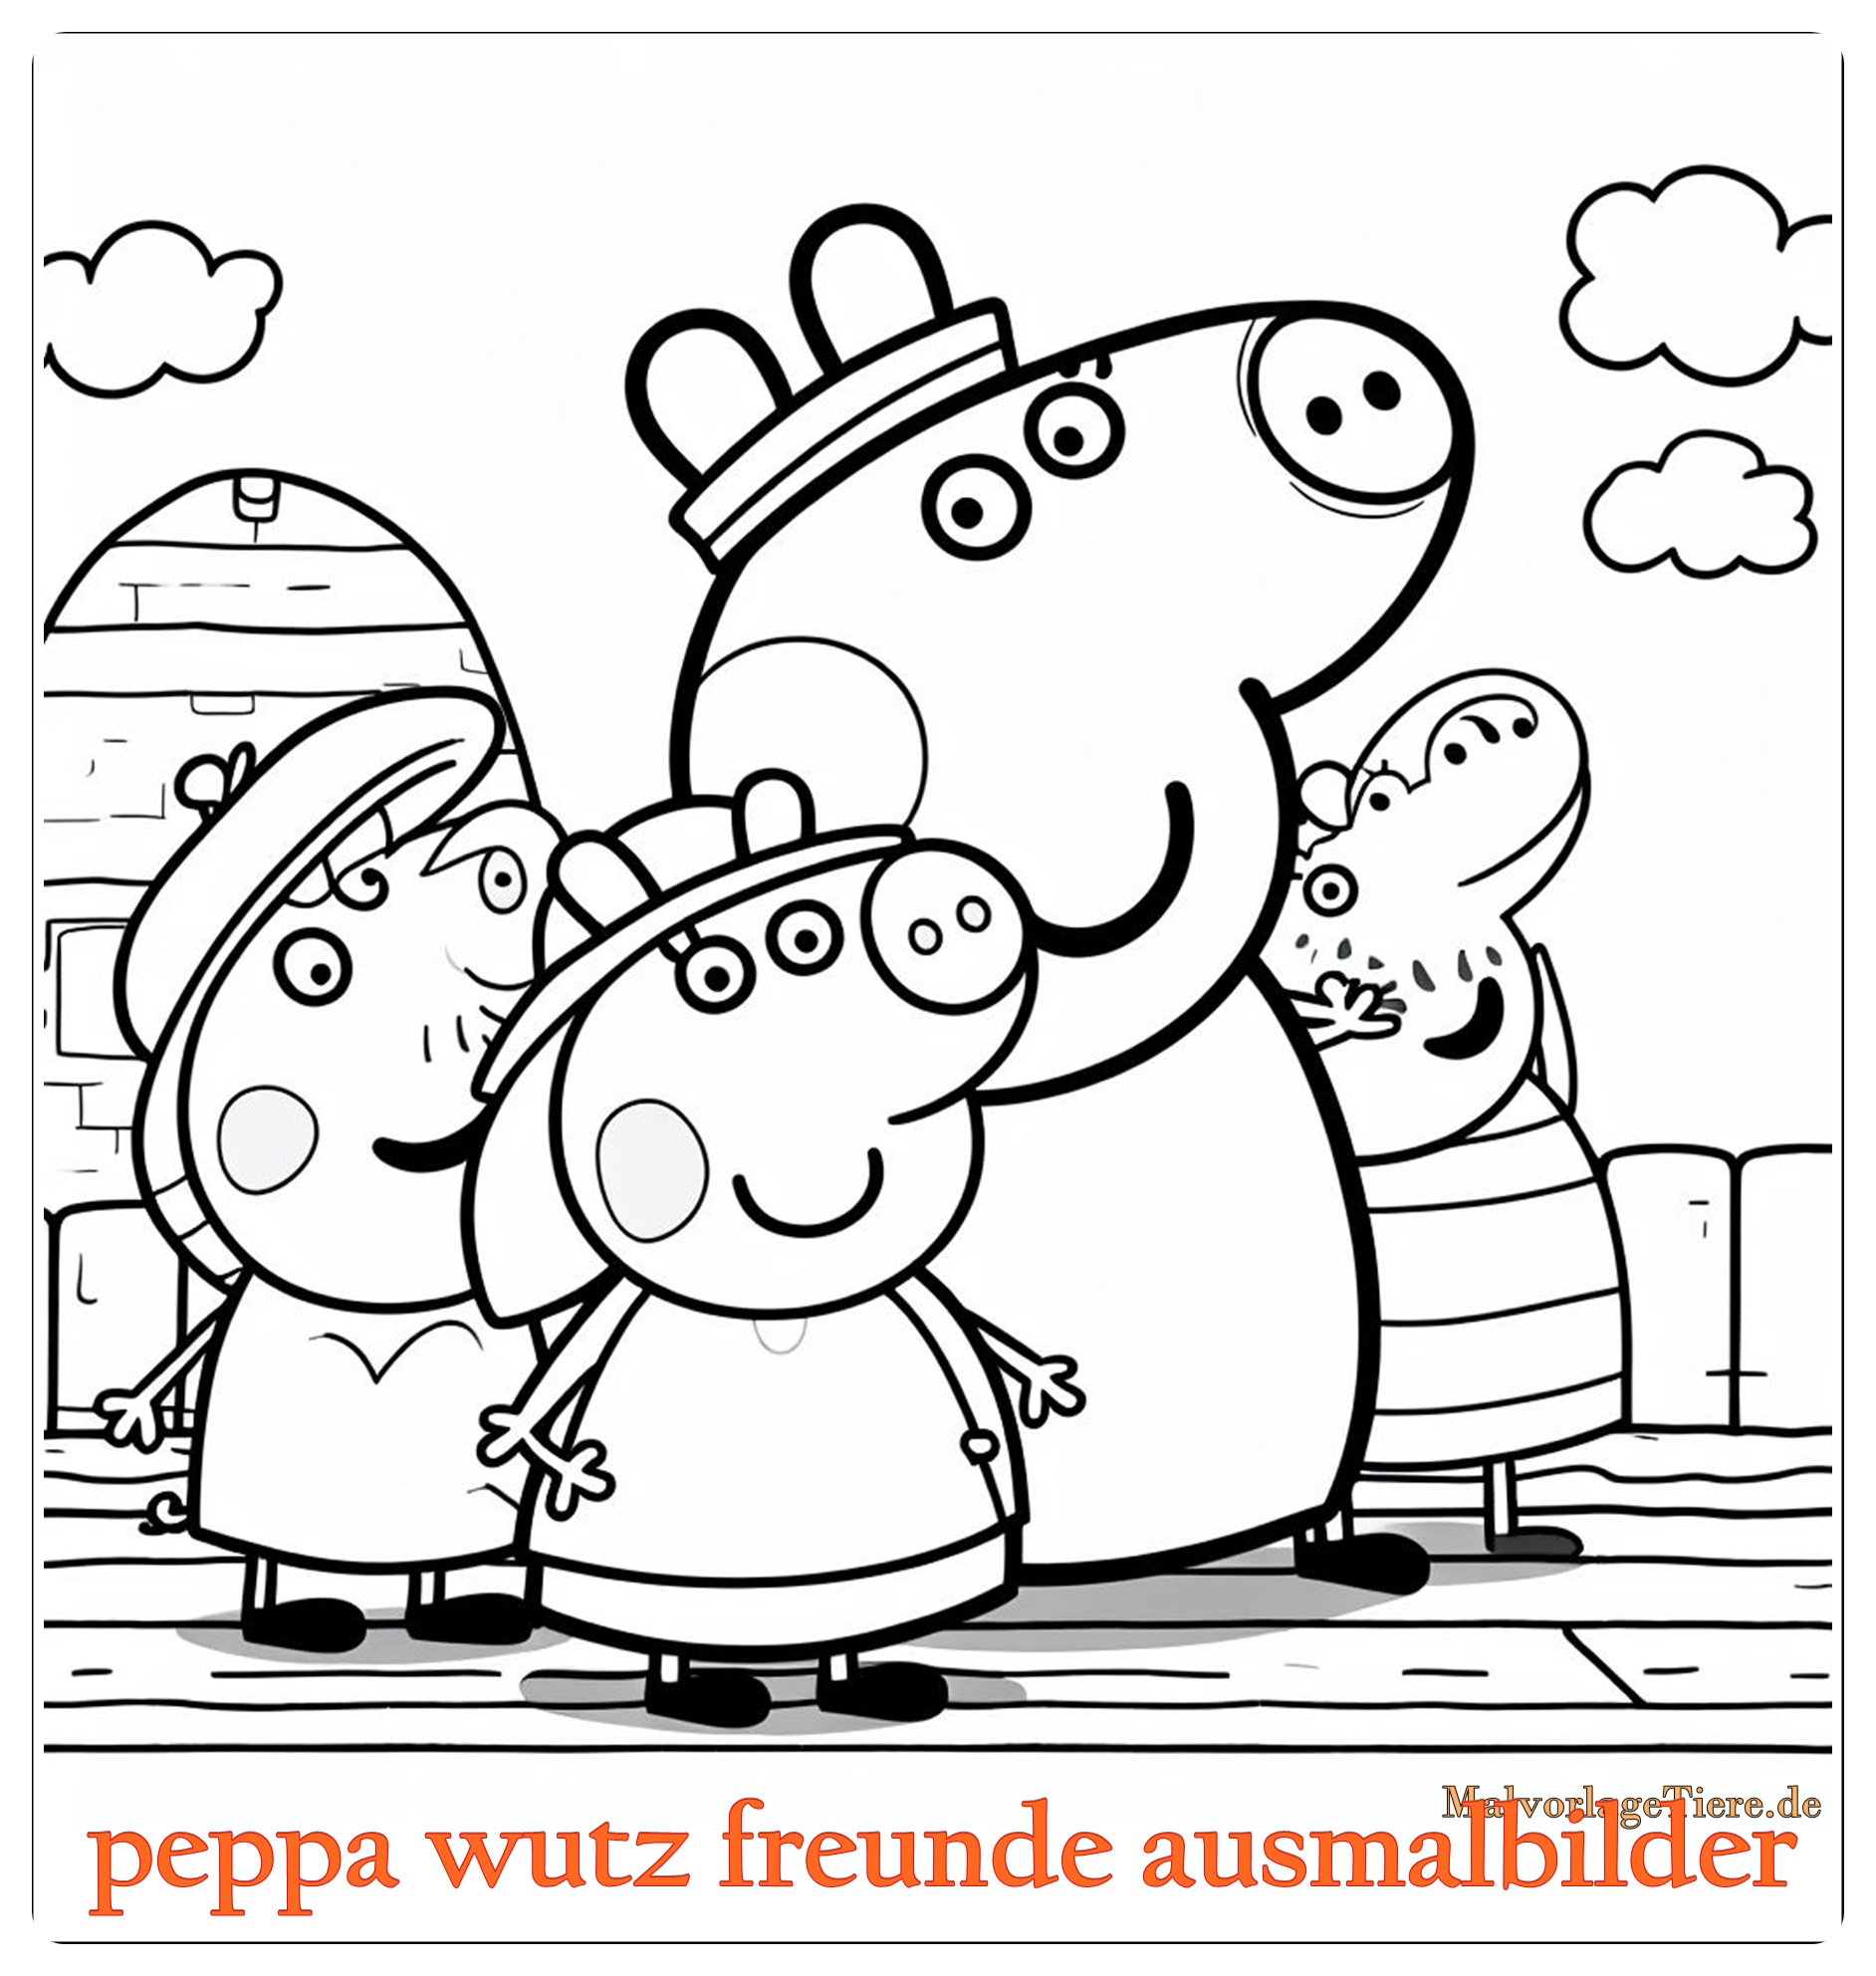 peppa wutz freunde ausmalbilder 01 by stadiongucker.de